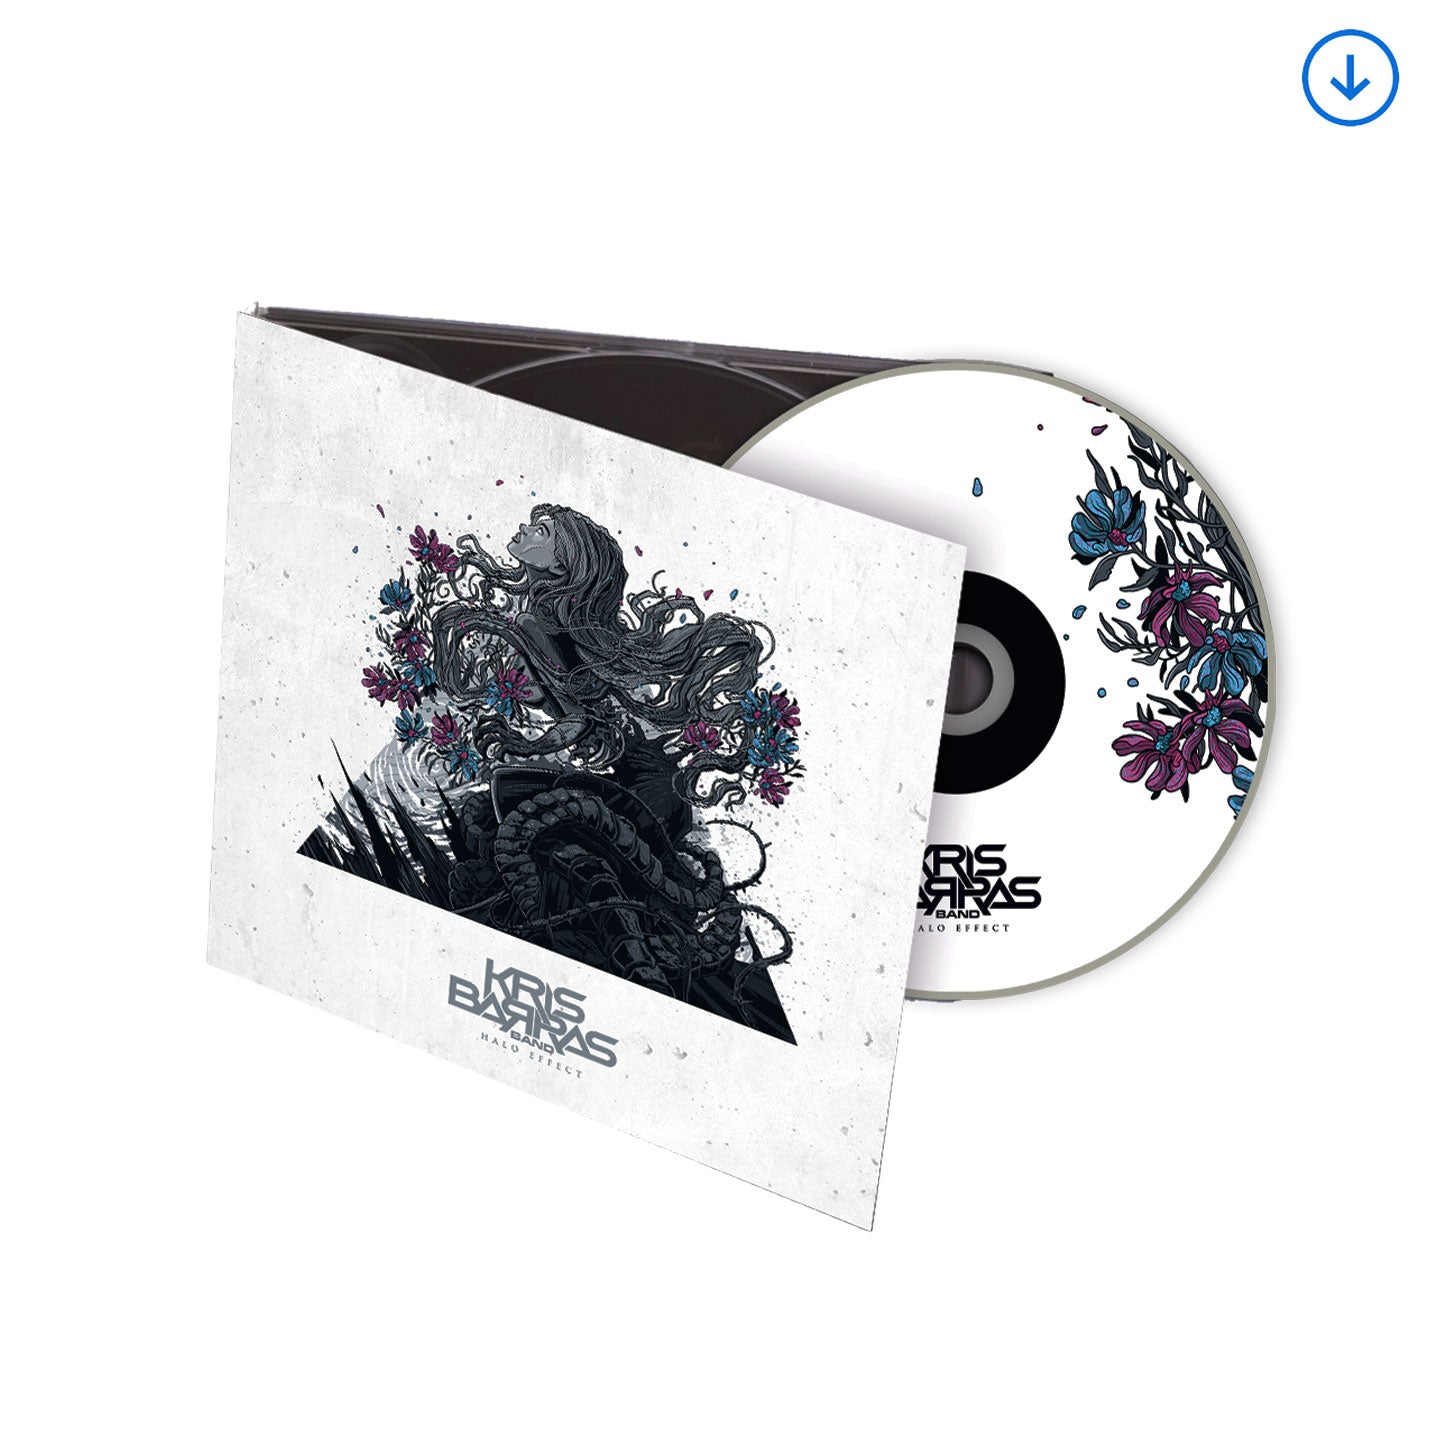 Kris Barras Band "Halo Effect" Digipak CD + Download - PRE-ORDER